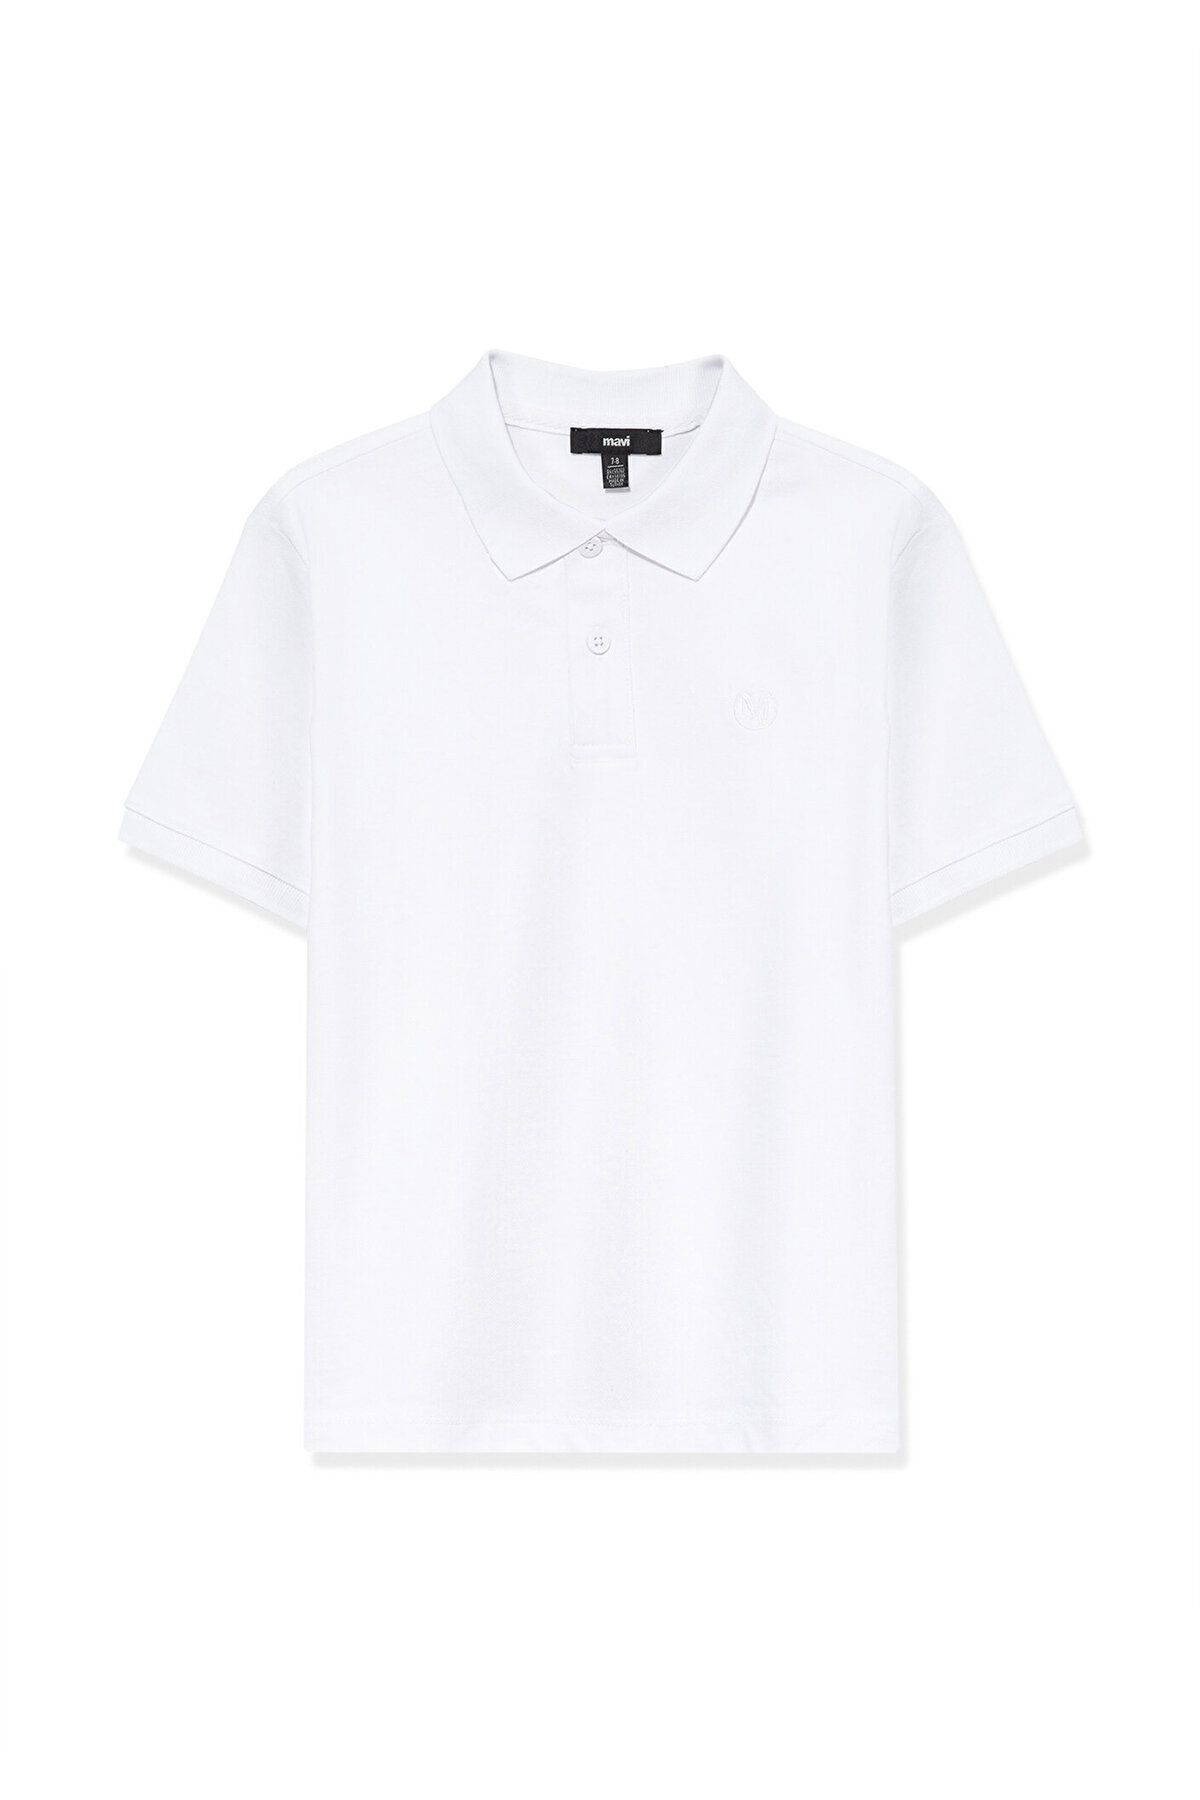 Mavi Beyaz Polo Tişört Regular Fit / Normal Kesim 6610199-620